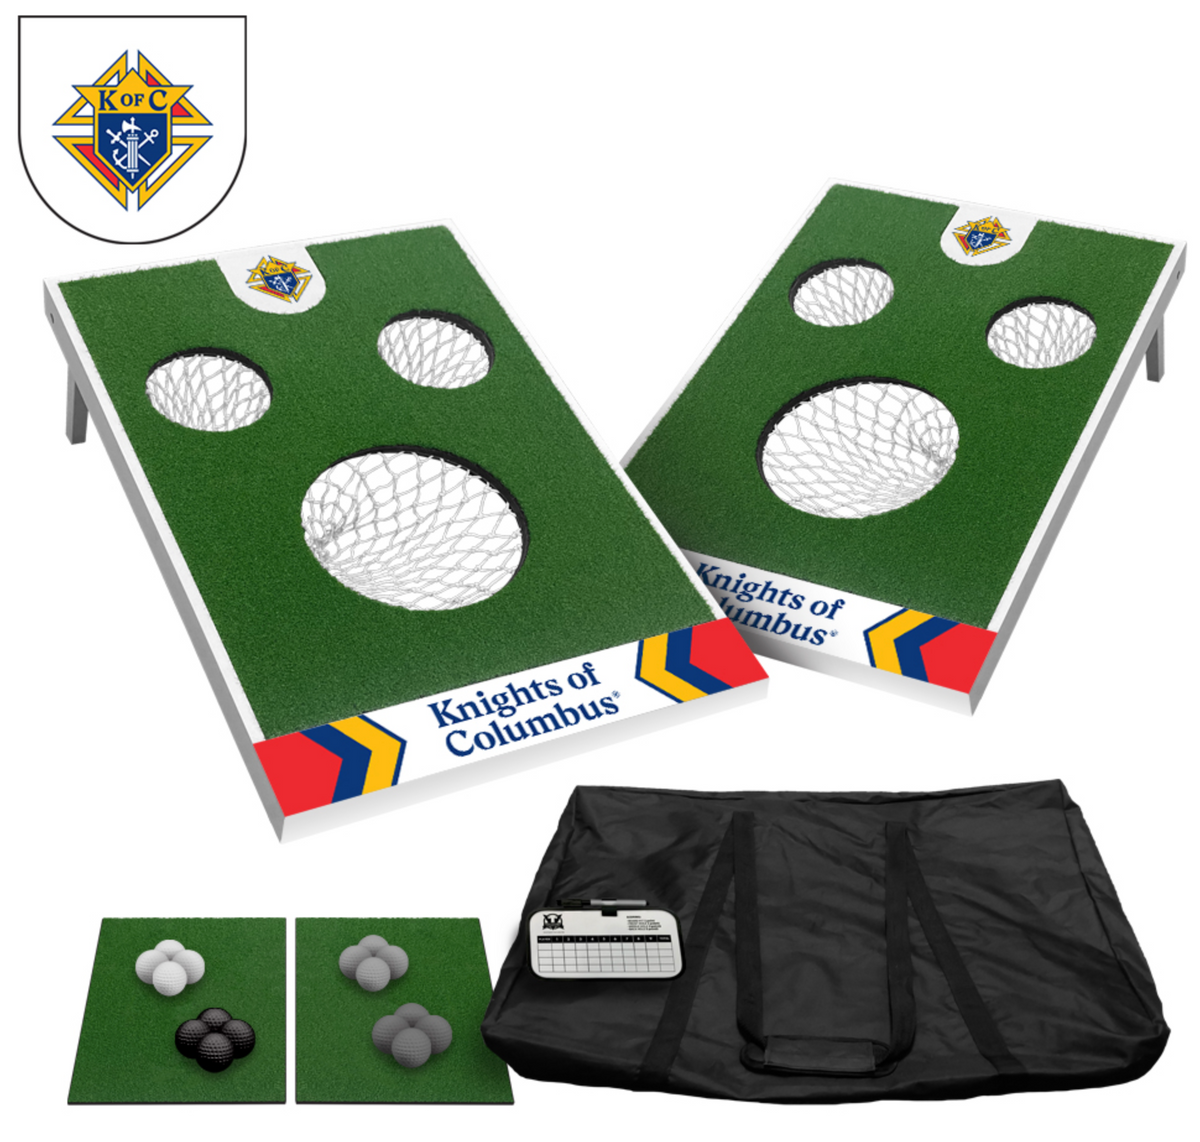 KofC Golf Chip Shot Game Set